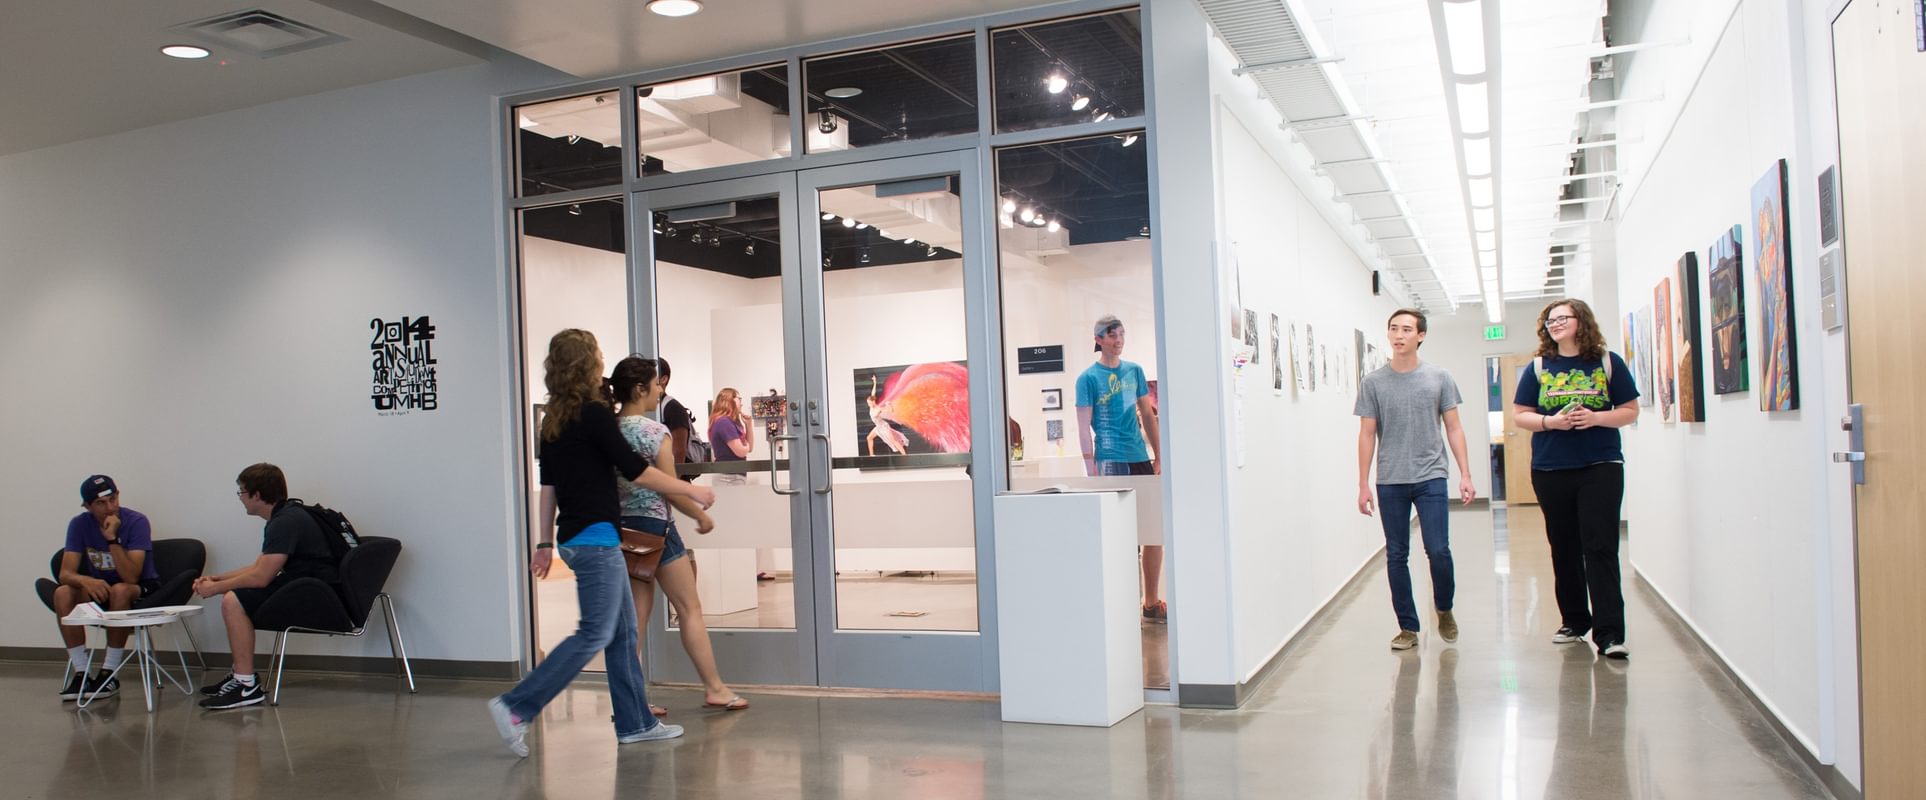 Art Exhibit to Feature Four Texas Women Printmakers